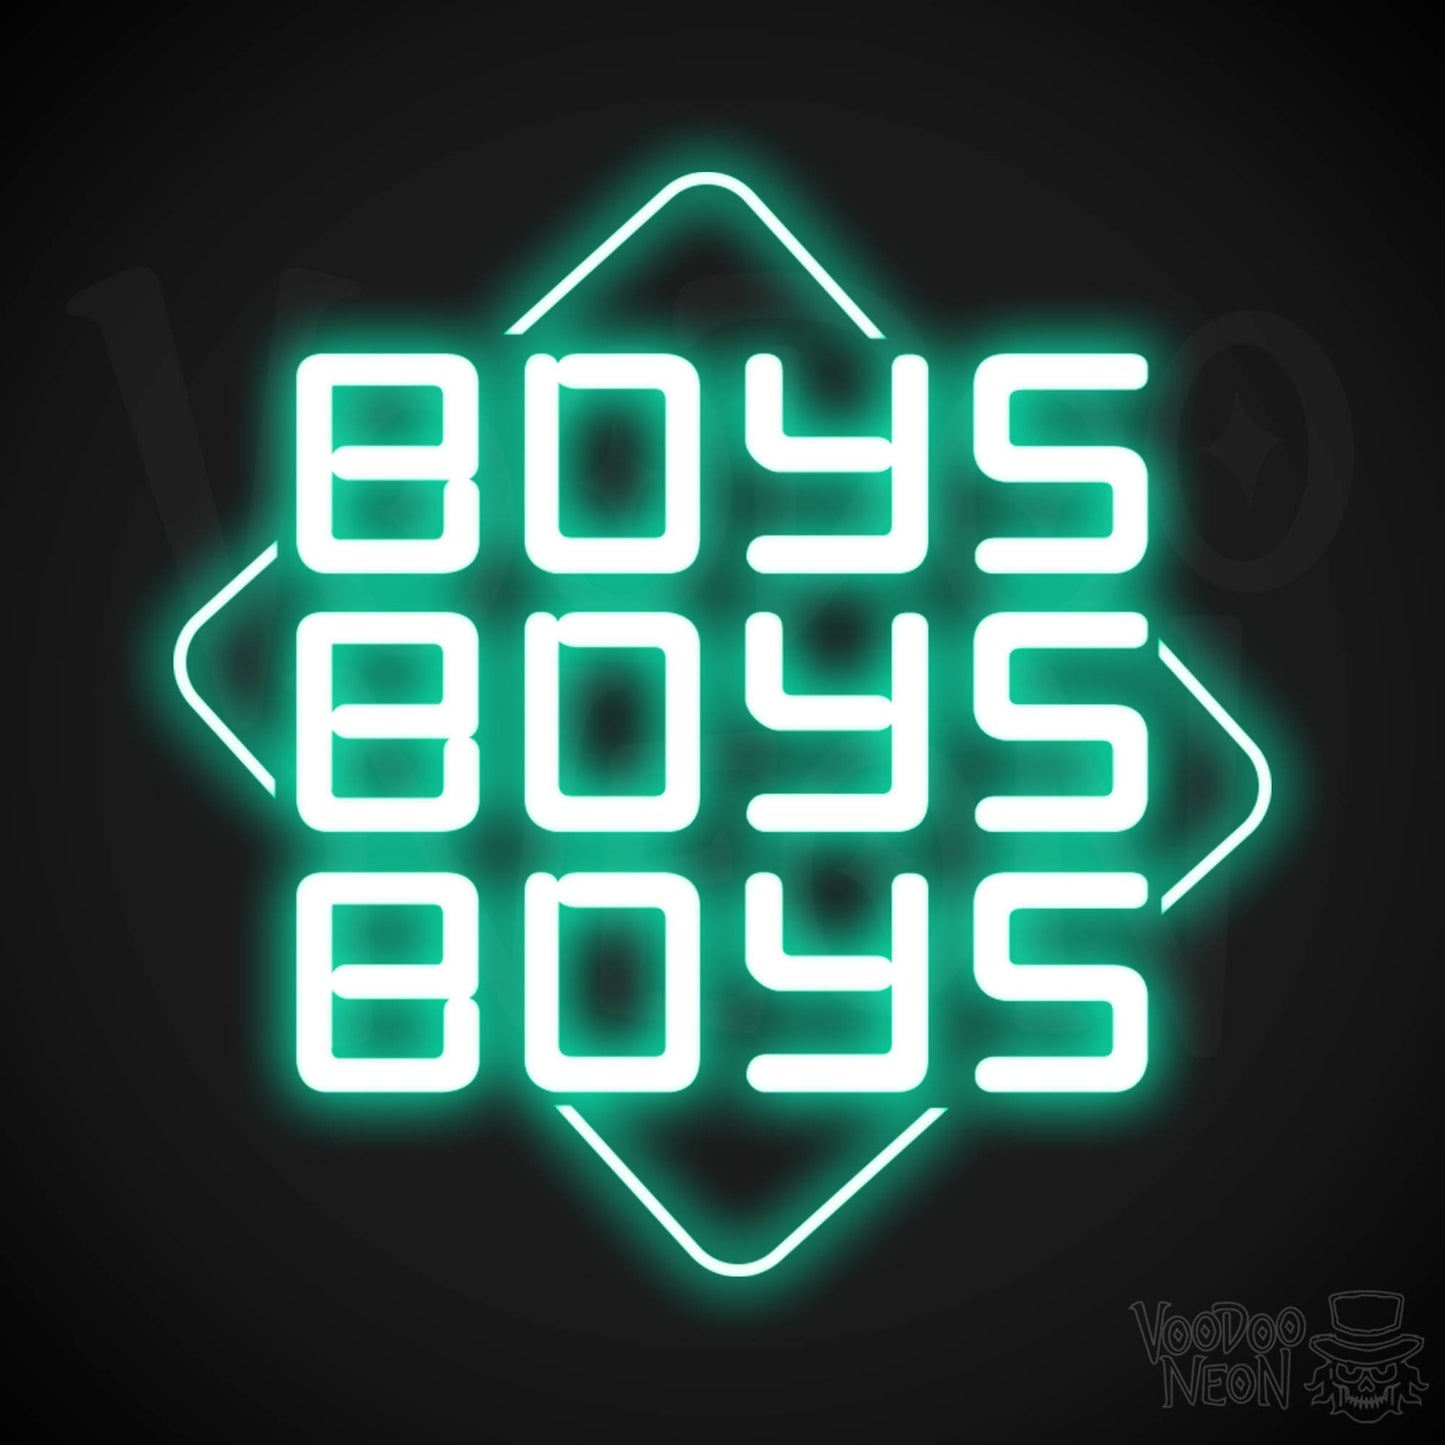 Boys Boys Boys Neon Sign - Neon Boys Boys Boys Sign - Neon Wall Art - Color Light Green